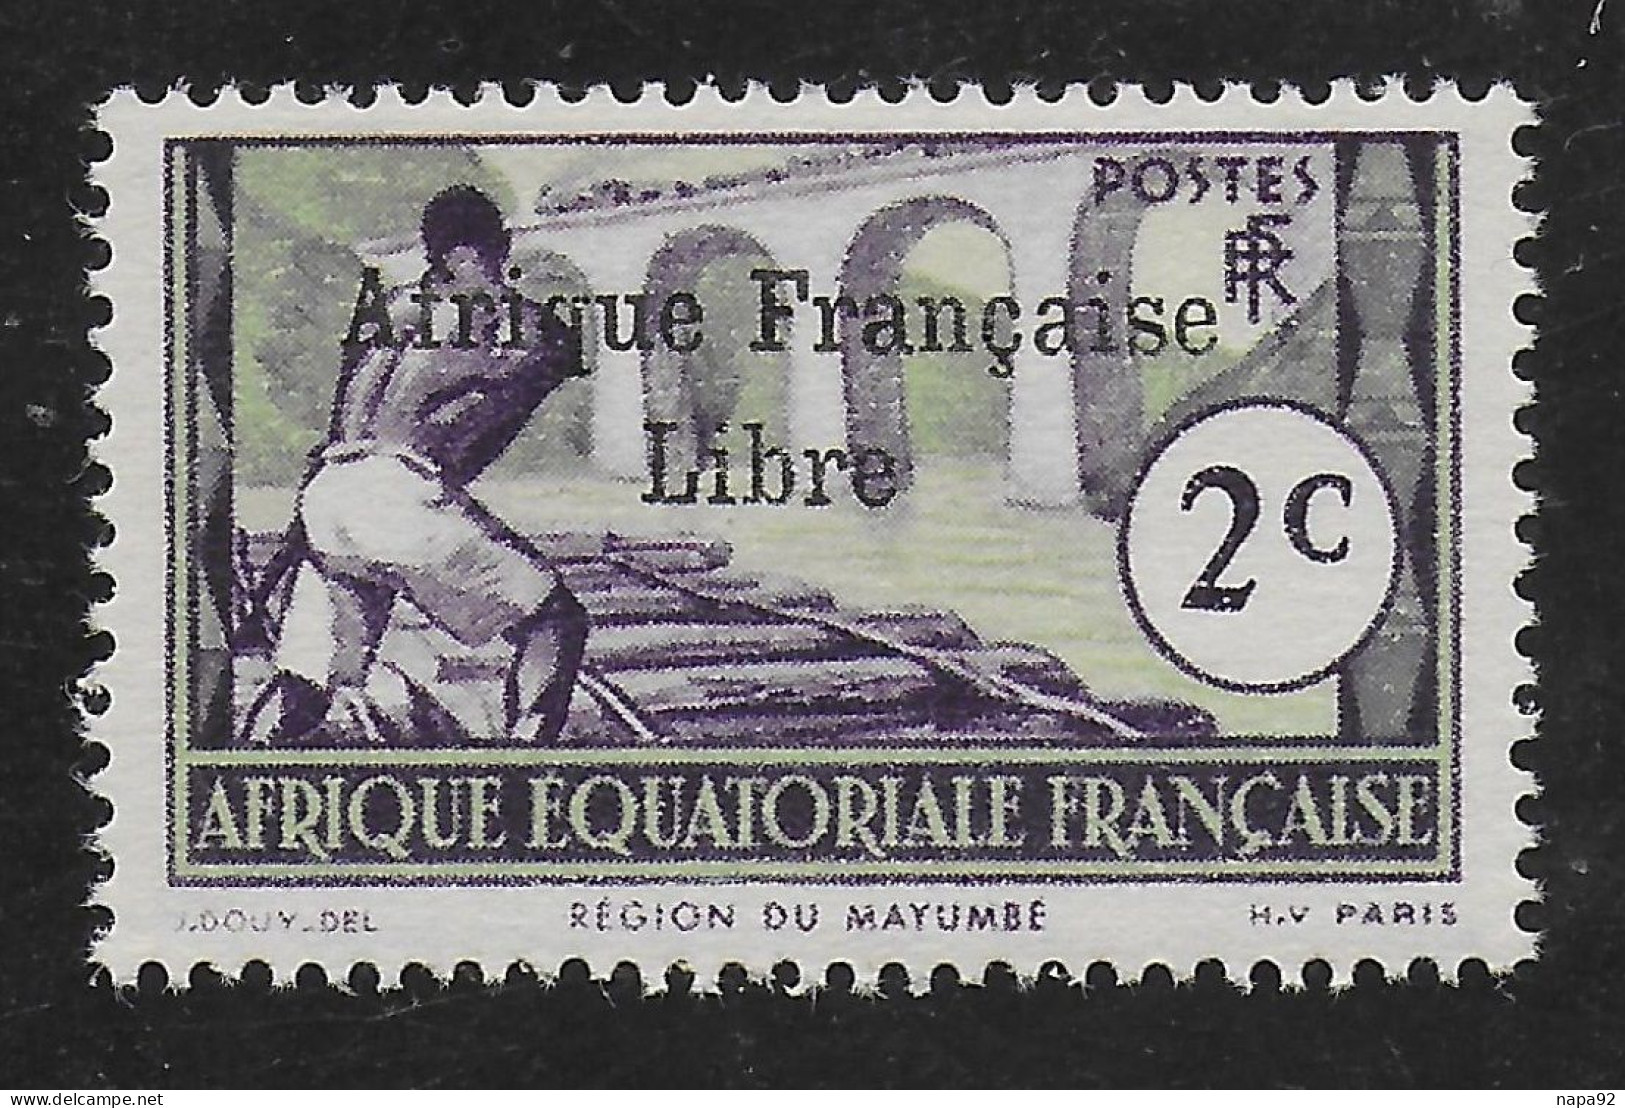 AFRIQUE EQUATORIALE FRANCAISE - AEF - A.E.F. - 1941 - YT 157** - 2ème TIRAGE - Nuevos